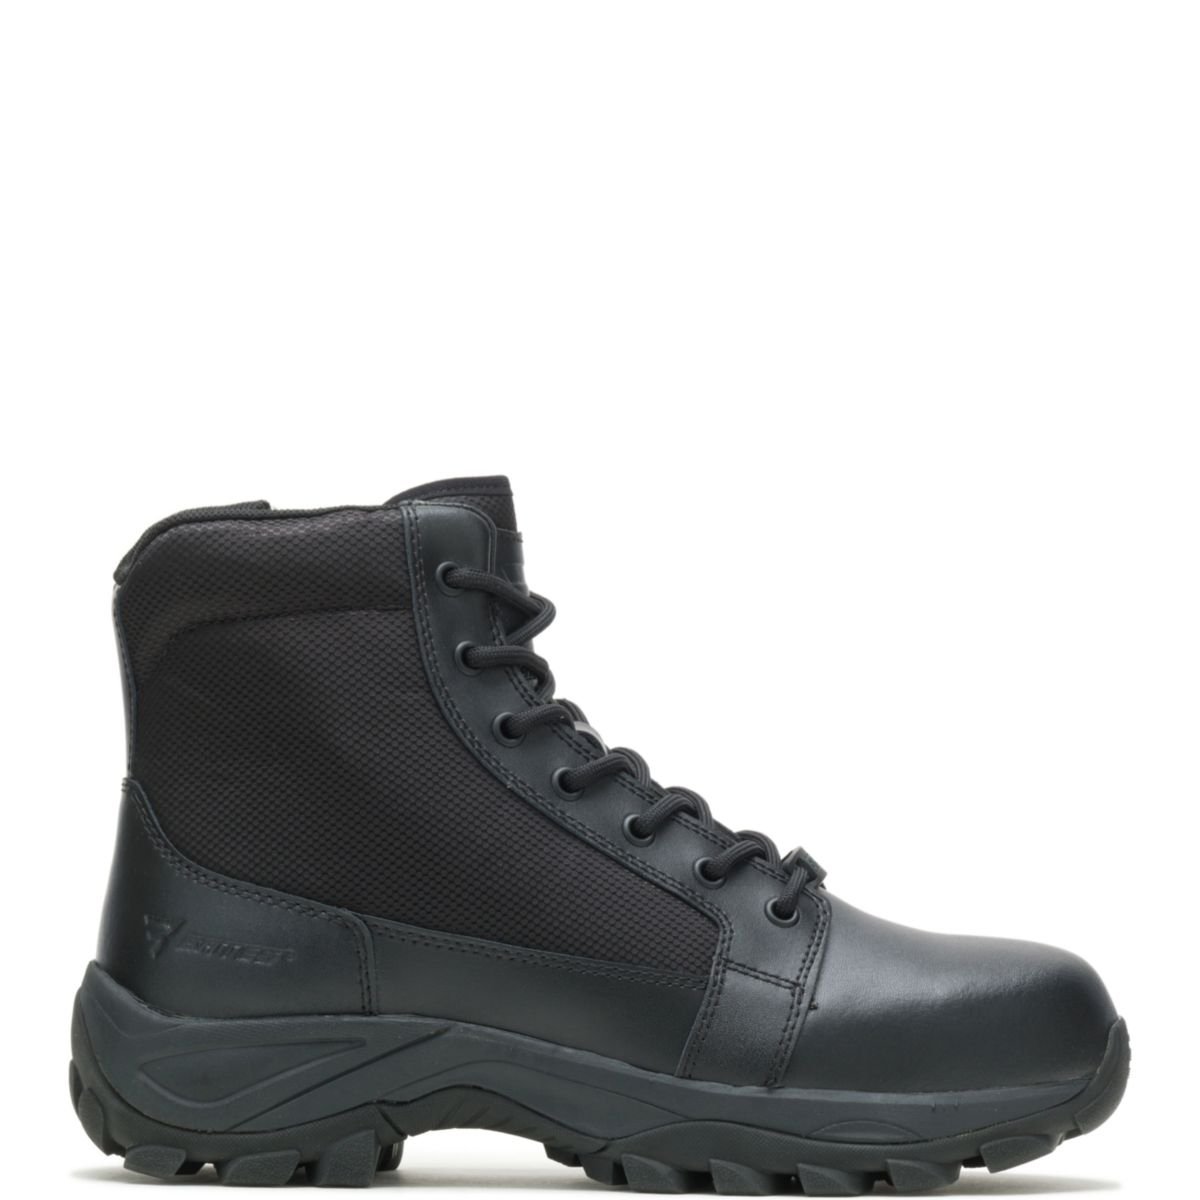 Bates Men's Fuse Zip 6-Inch Side Zip Steel Toe Work Boot Black - E06505 BLACK - BLACK, 13